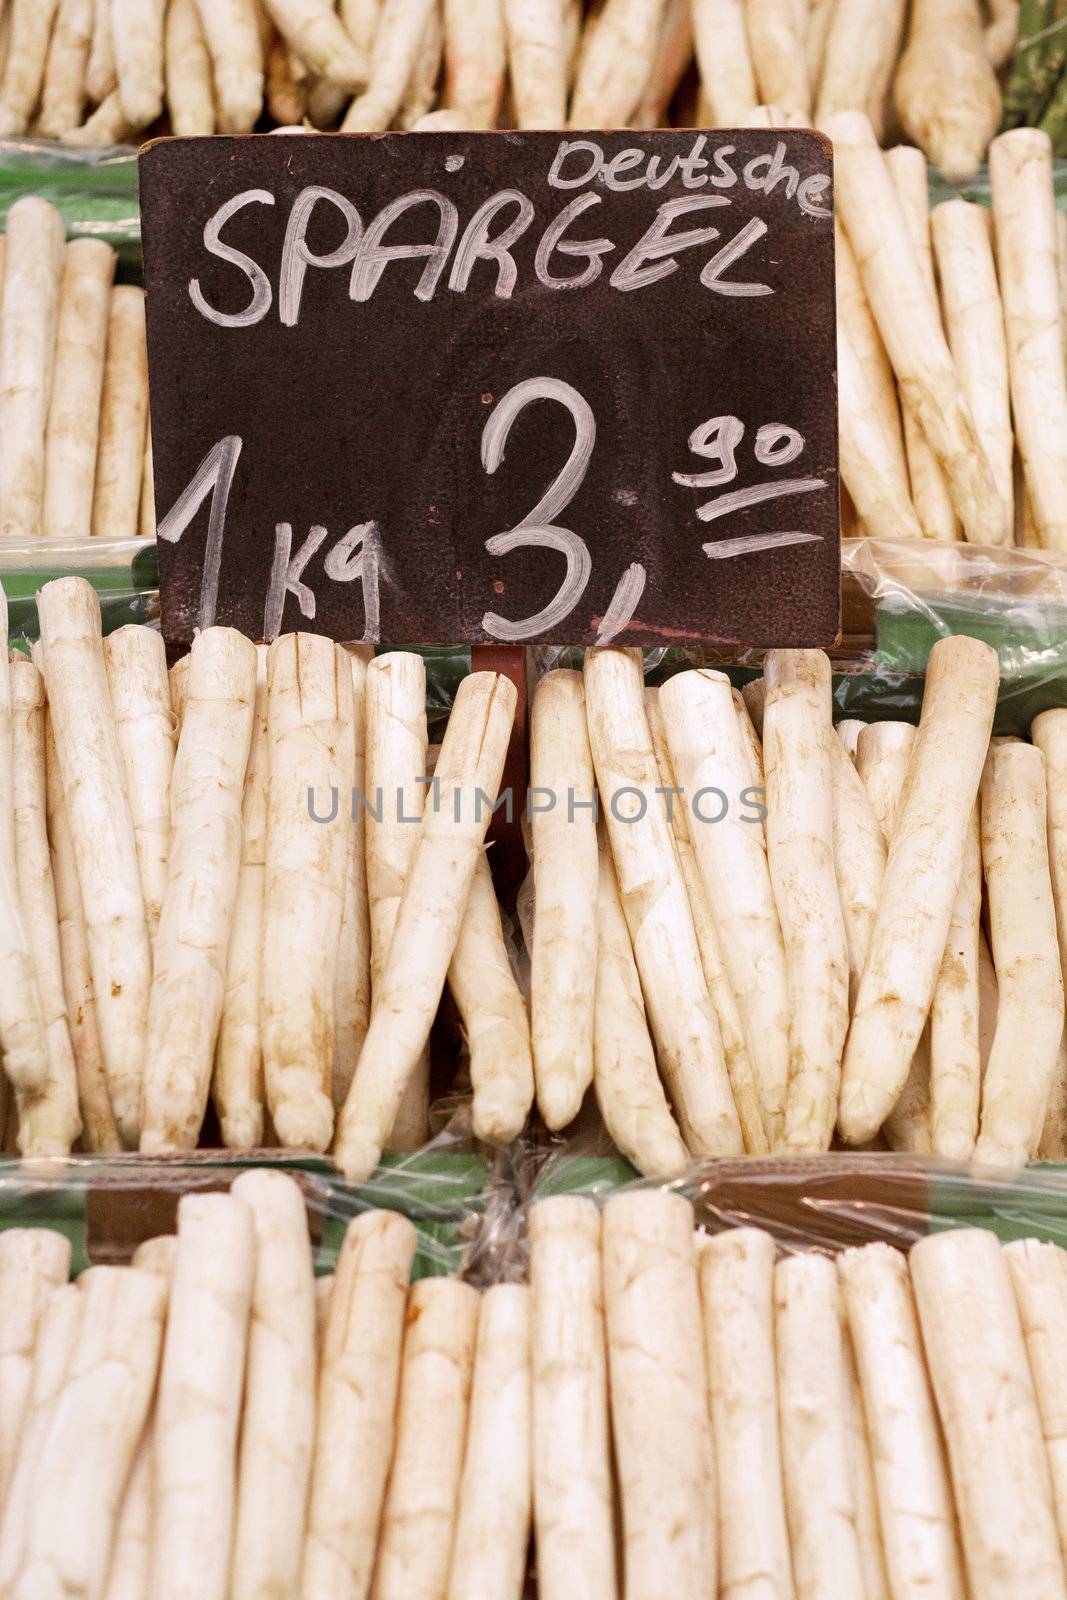 Fresh asparagus at market stall